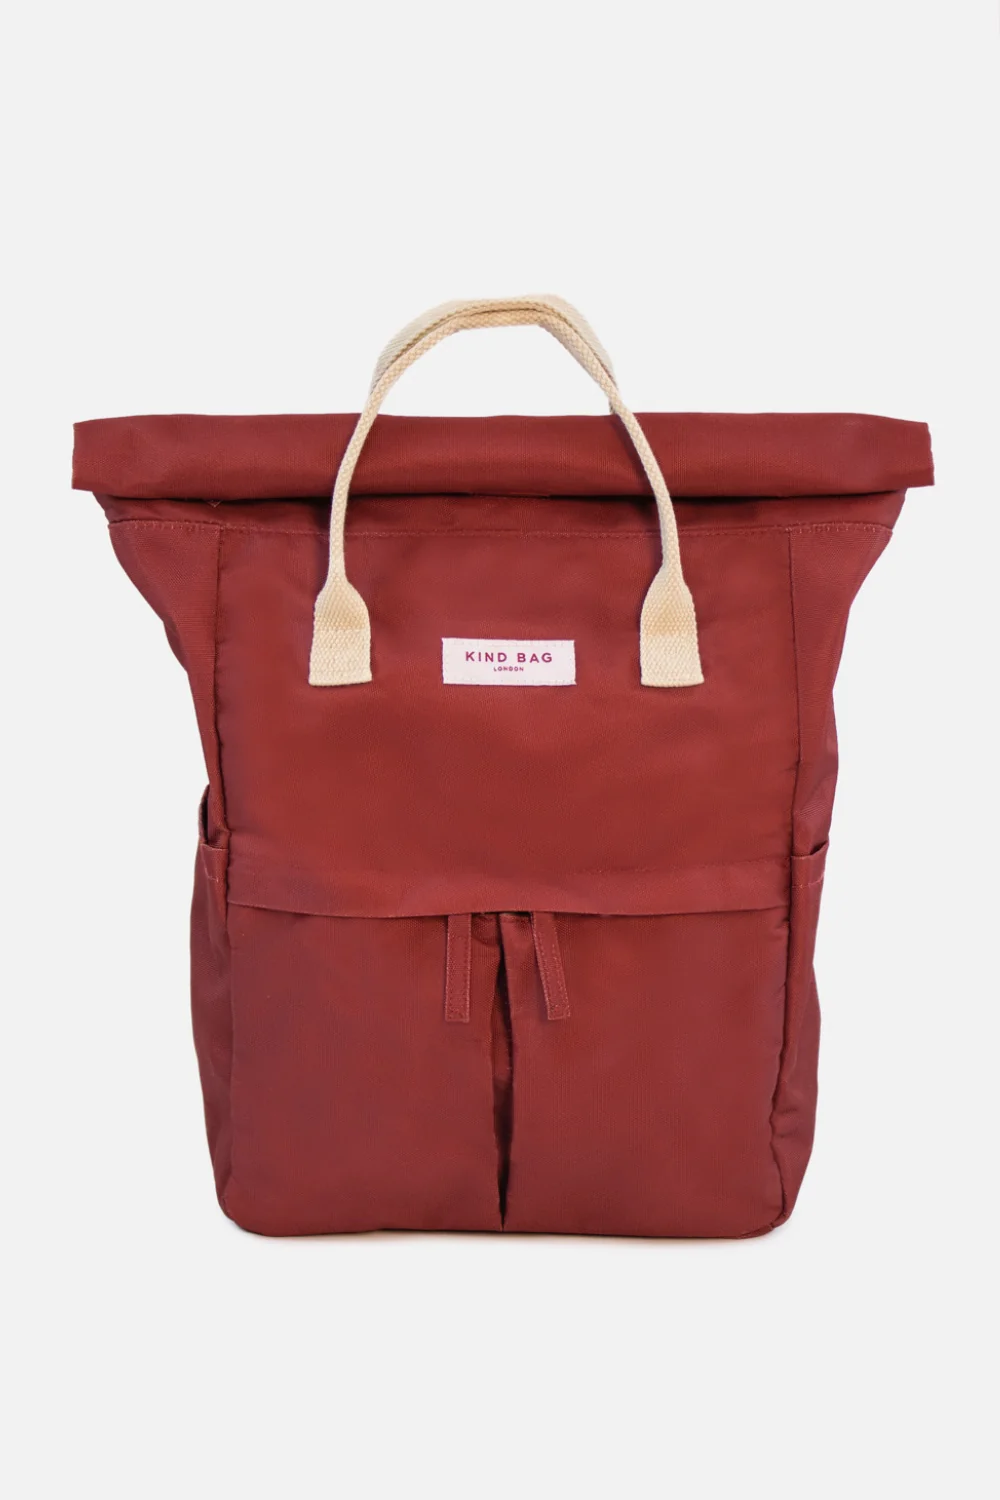 Kind Bag Medium Hackney Sustainable Backpack - Burgundy